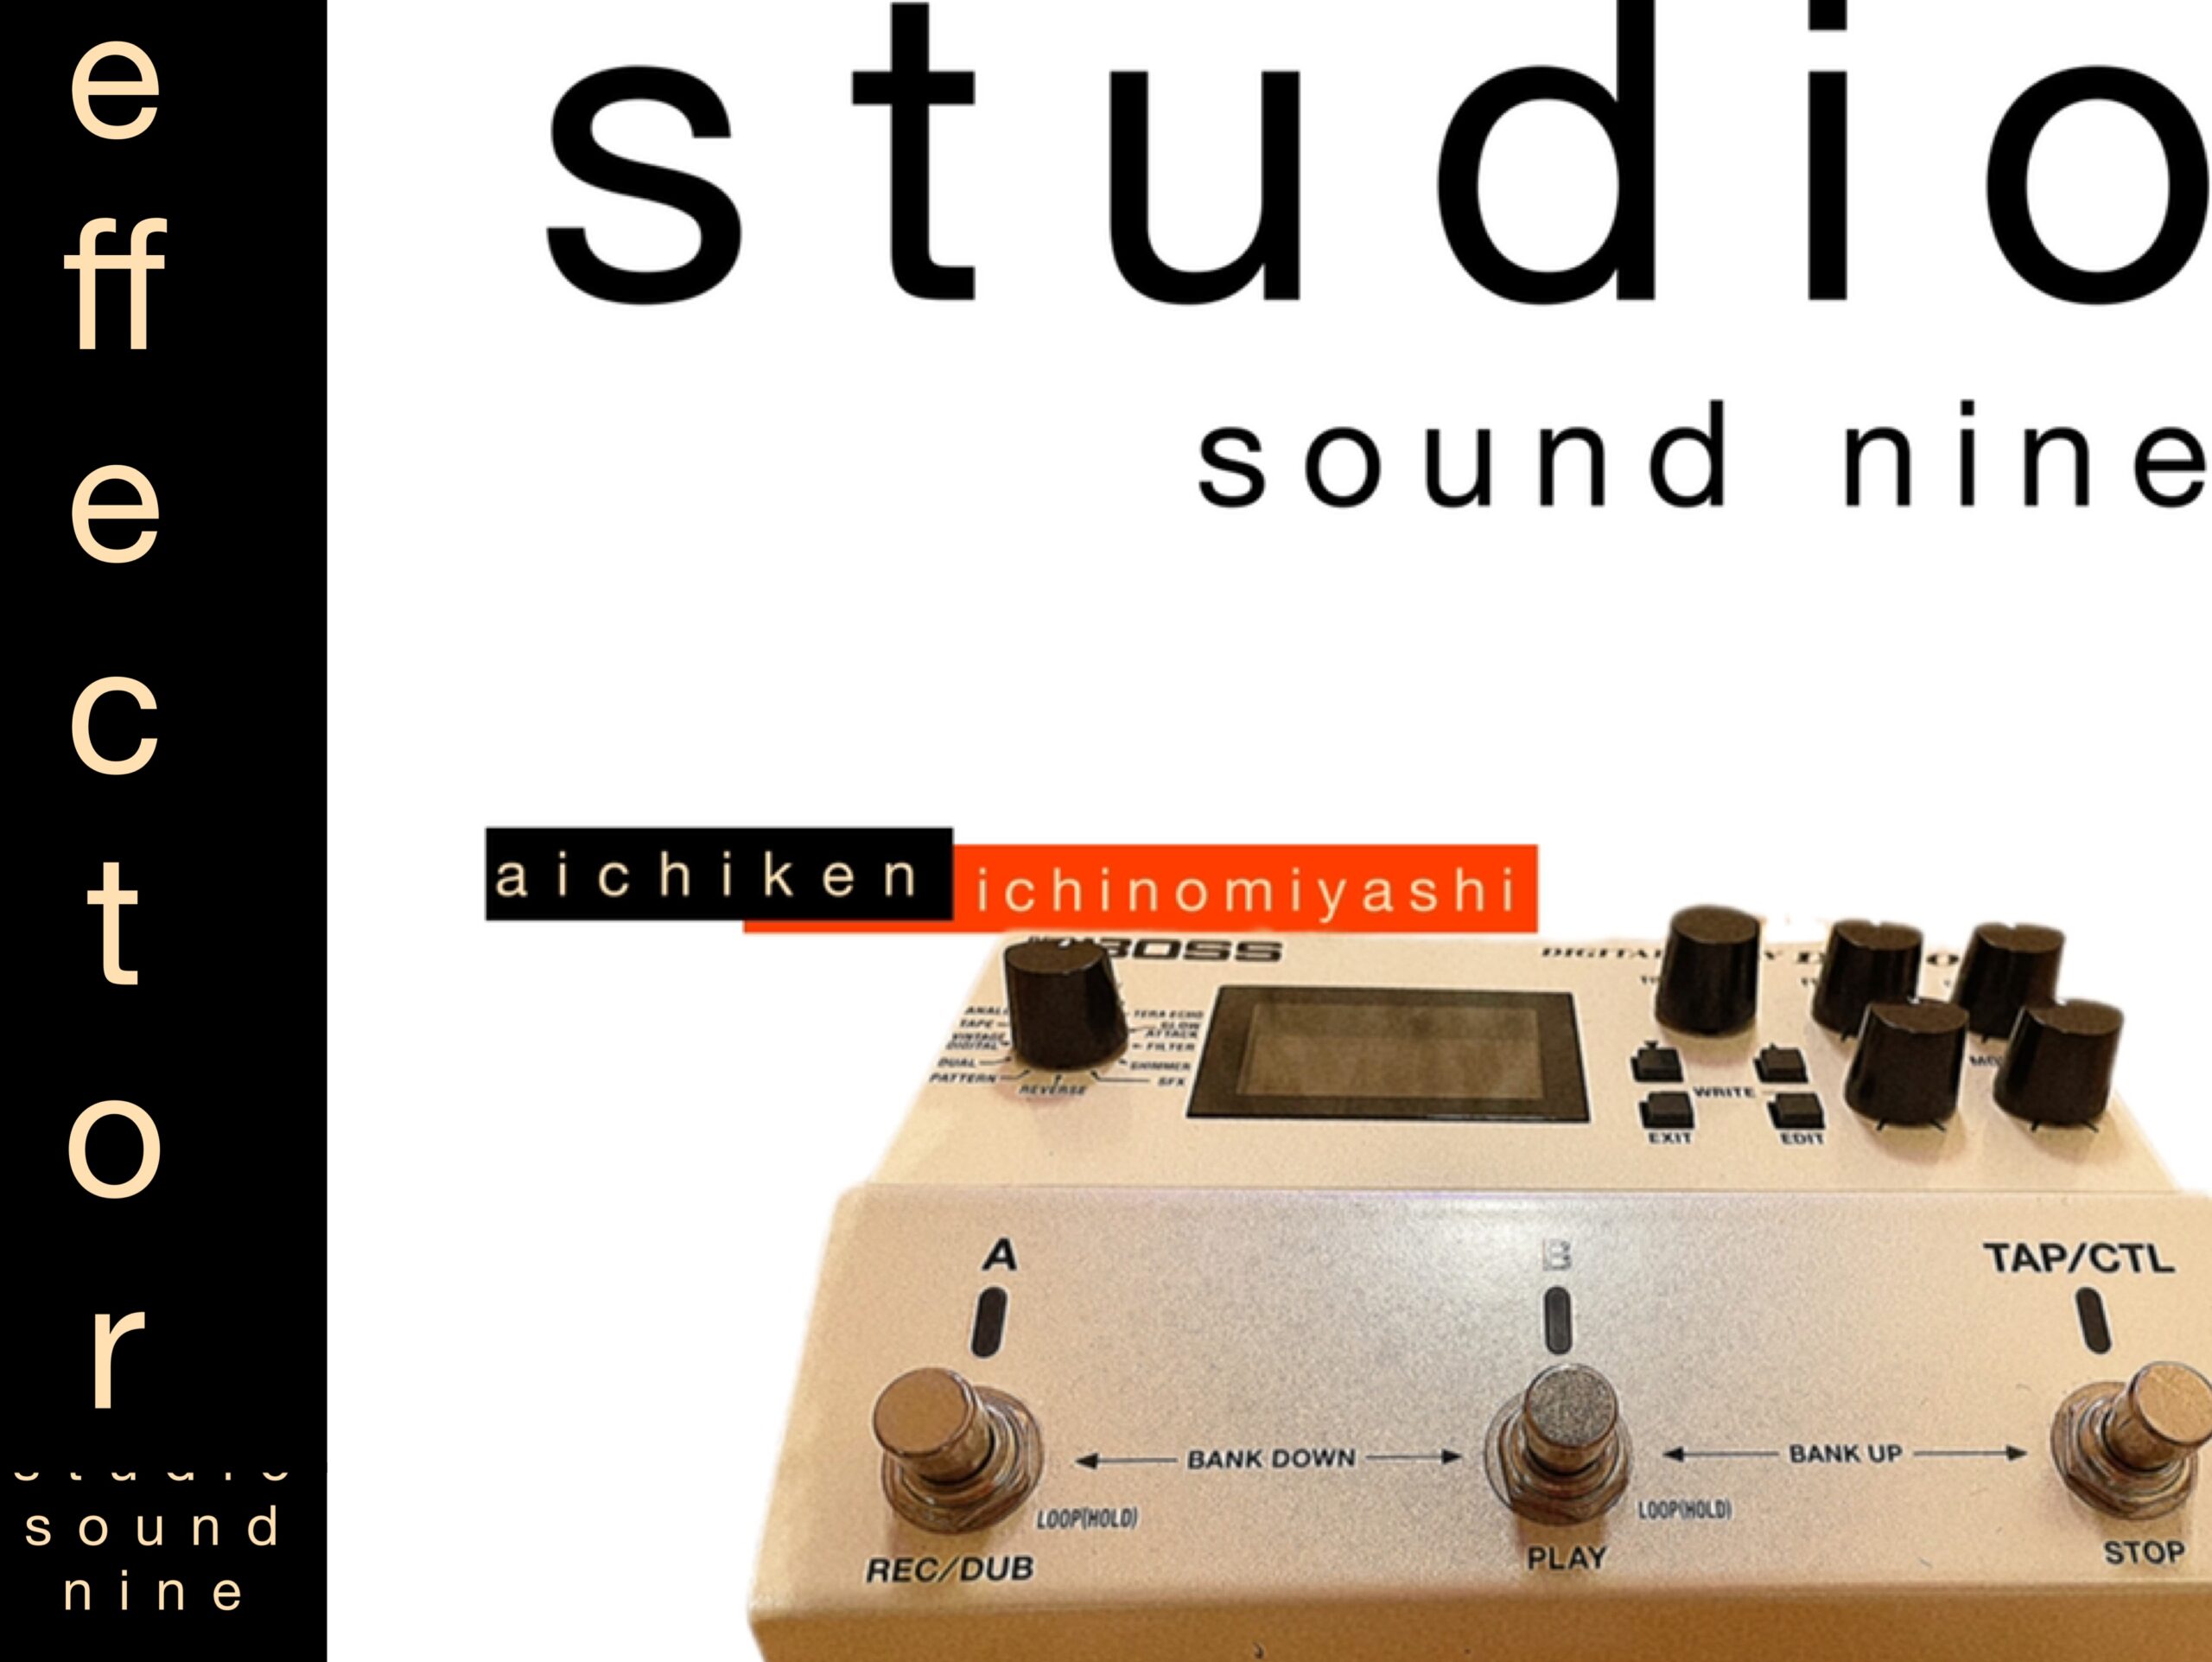 BOSS/effector | STUDIO SOUND NINE | スタジオ サウンドナイン